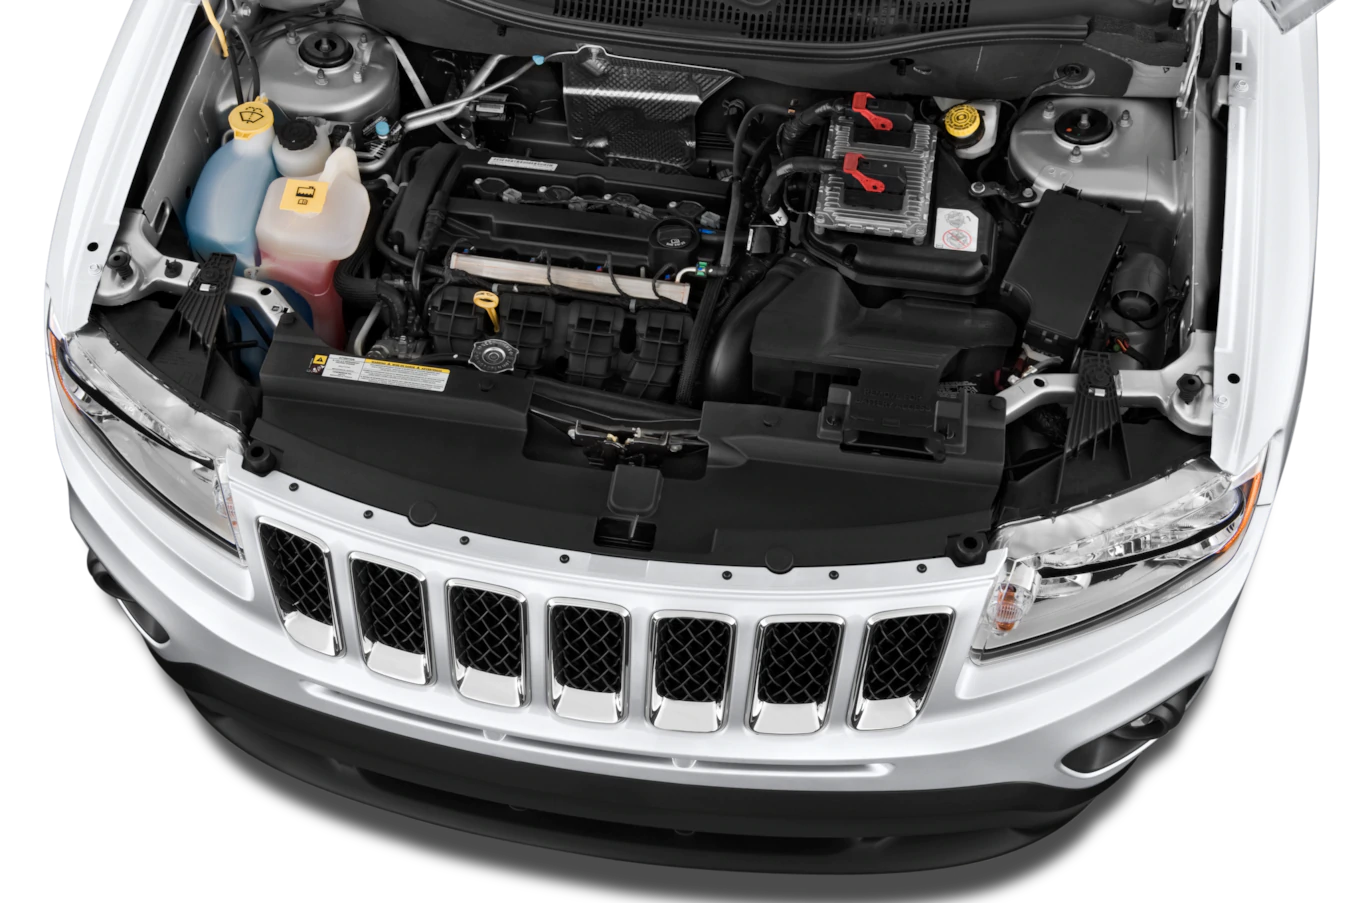 Двигатель джип компас. Двигатель 2.4 джип компас. Двигатель Jeep Compass 2.4. Jeep Compass под капотом. Джип компас 2013 год аккумулятор 2.4.